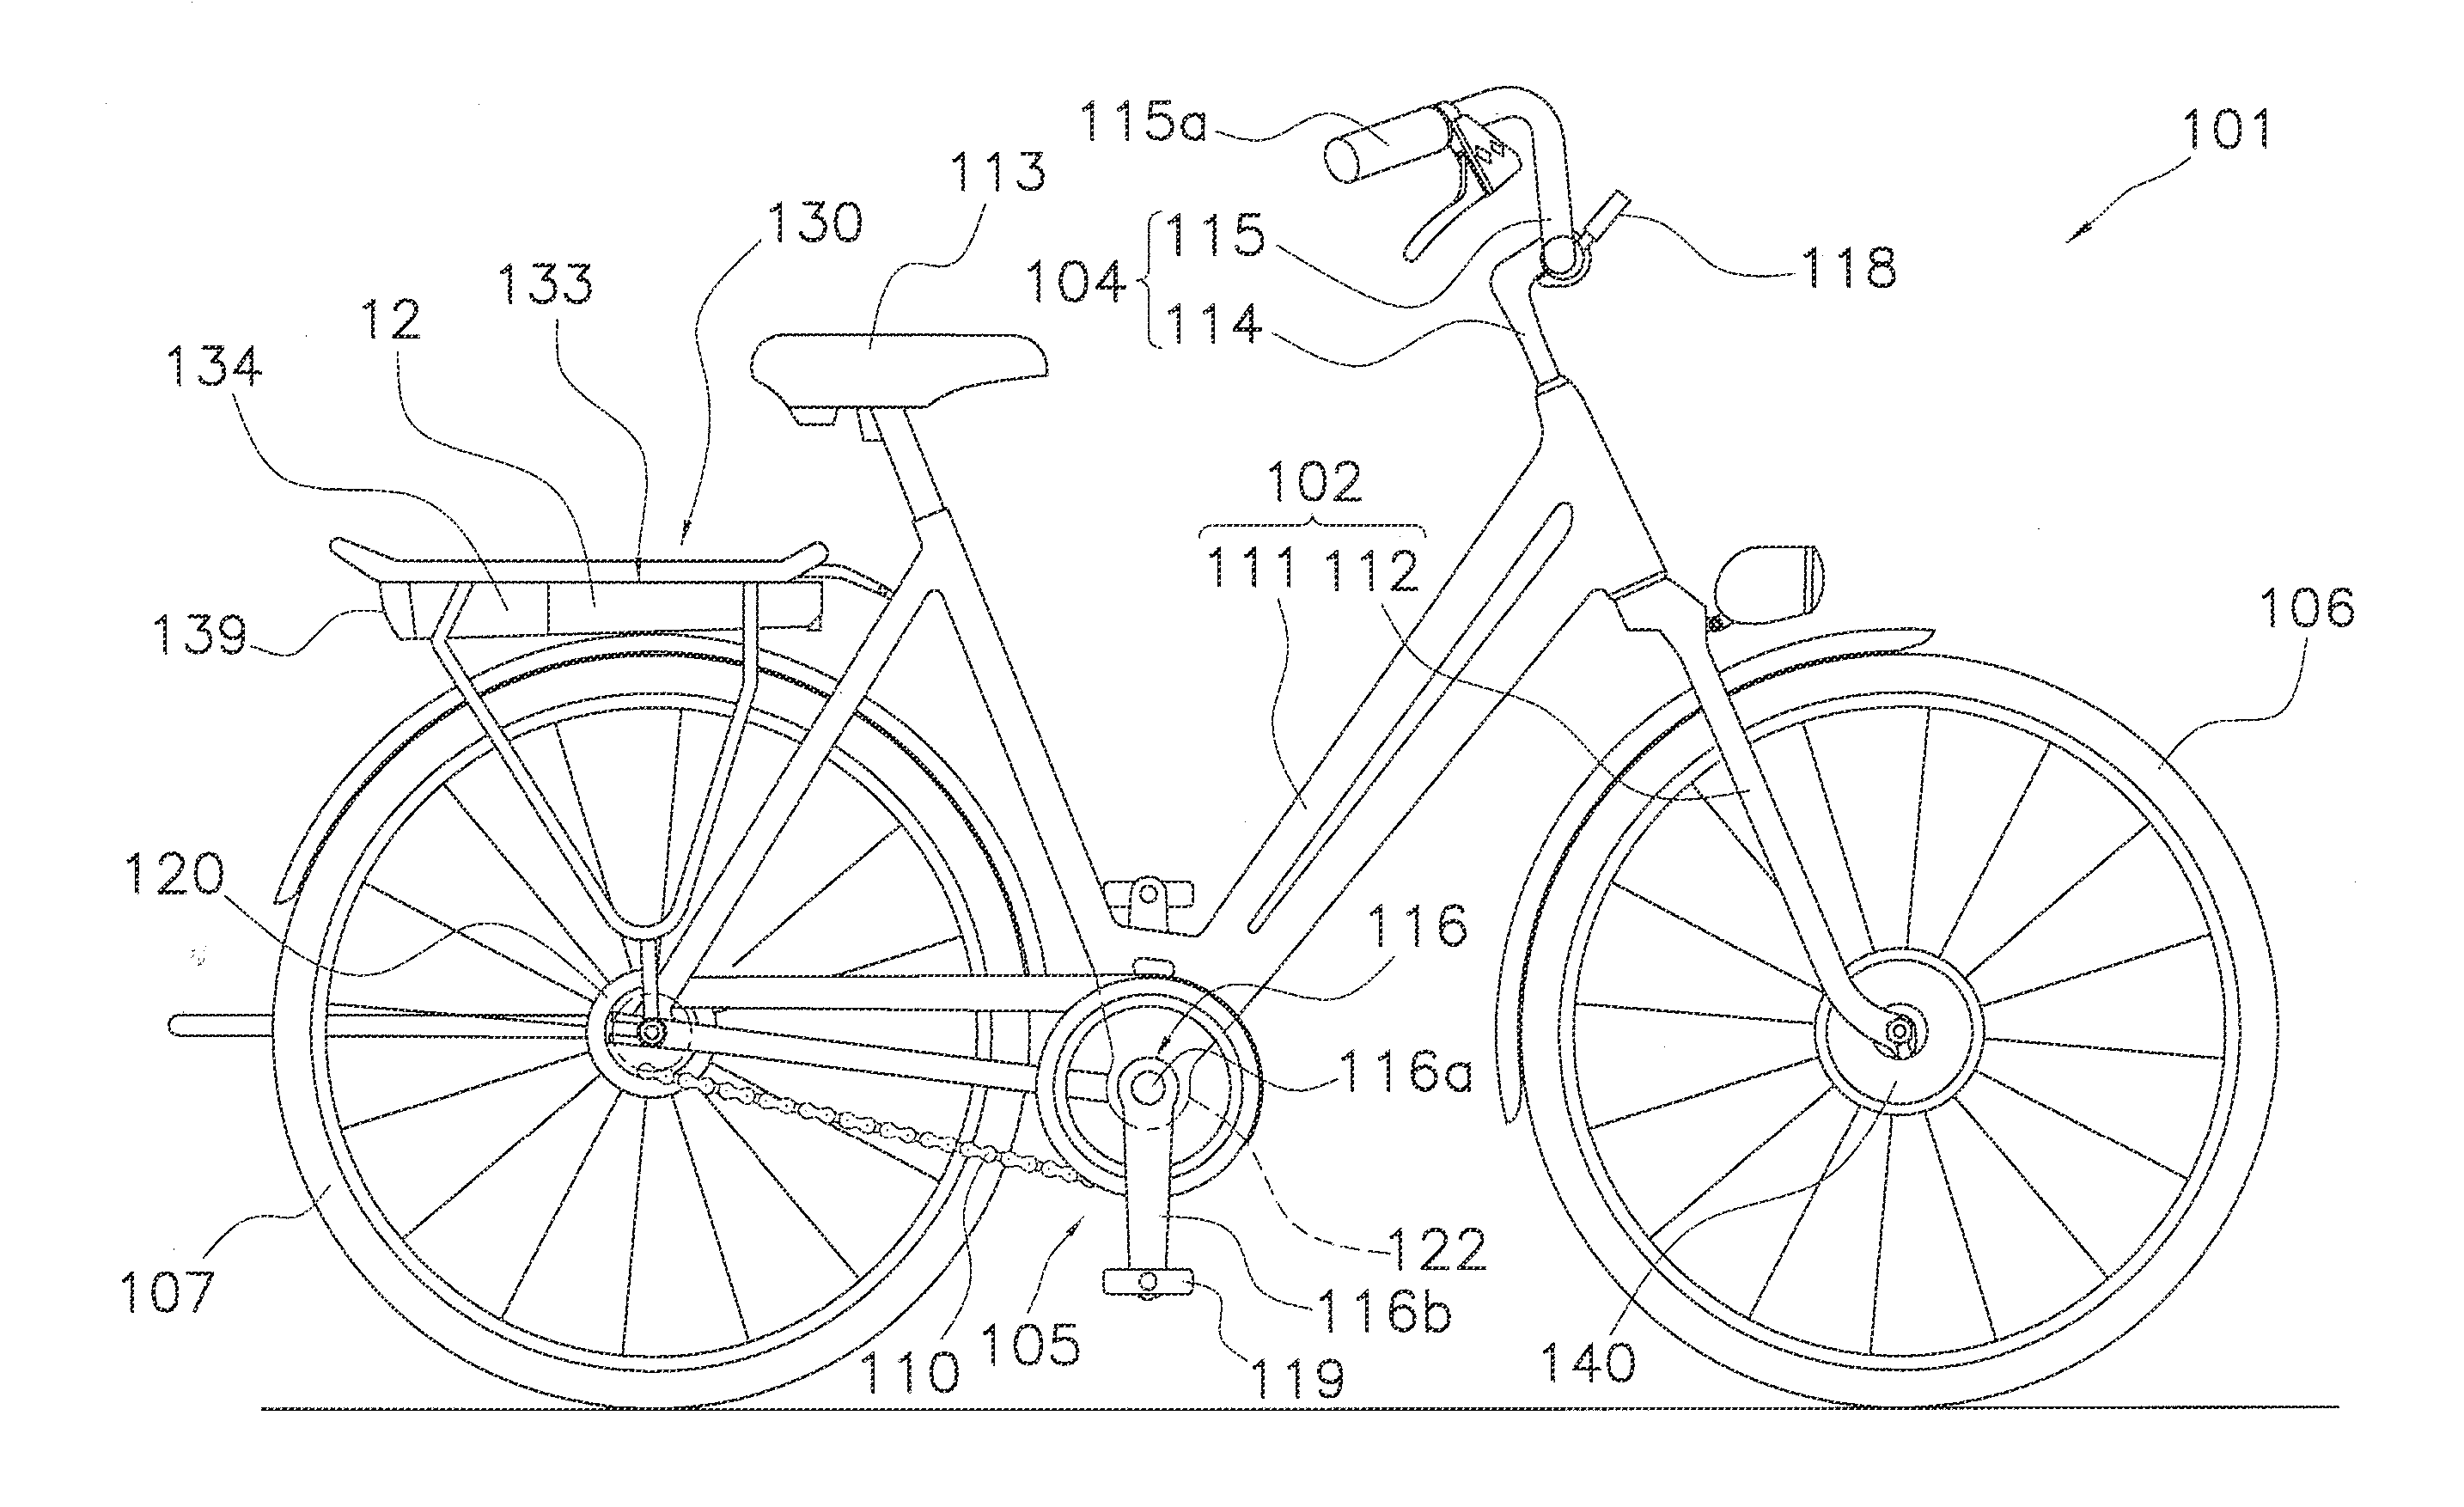 Bicycle control apparatus